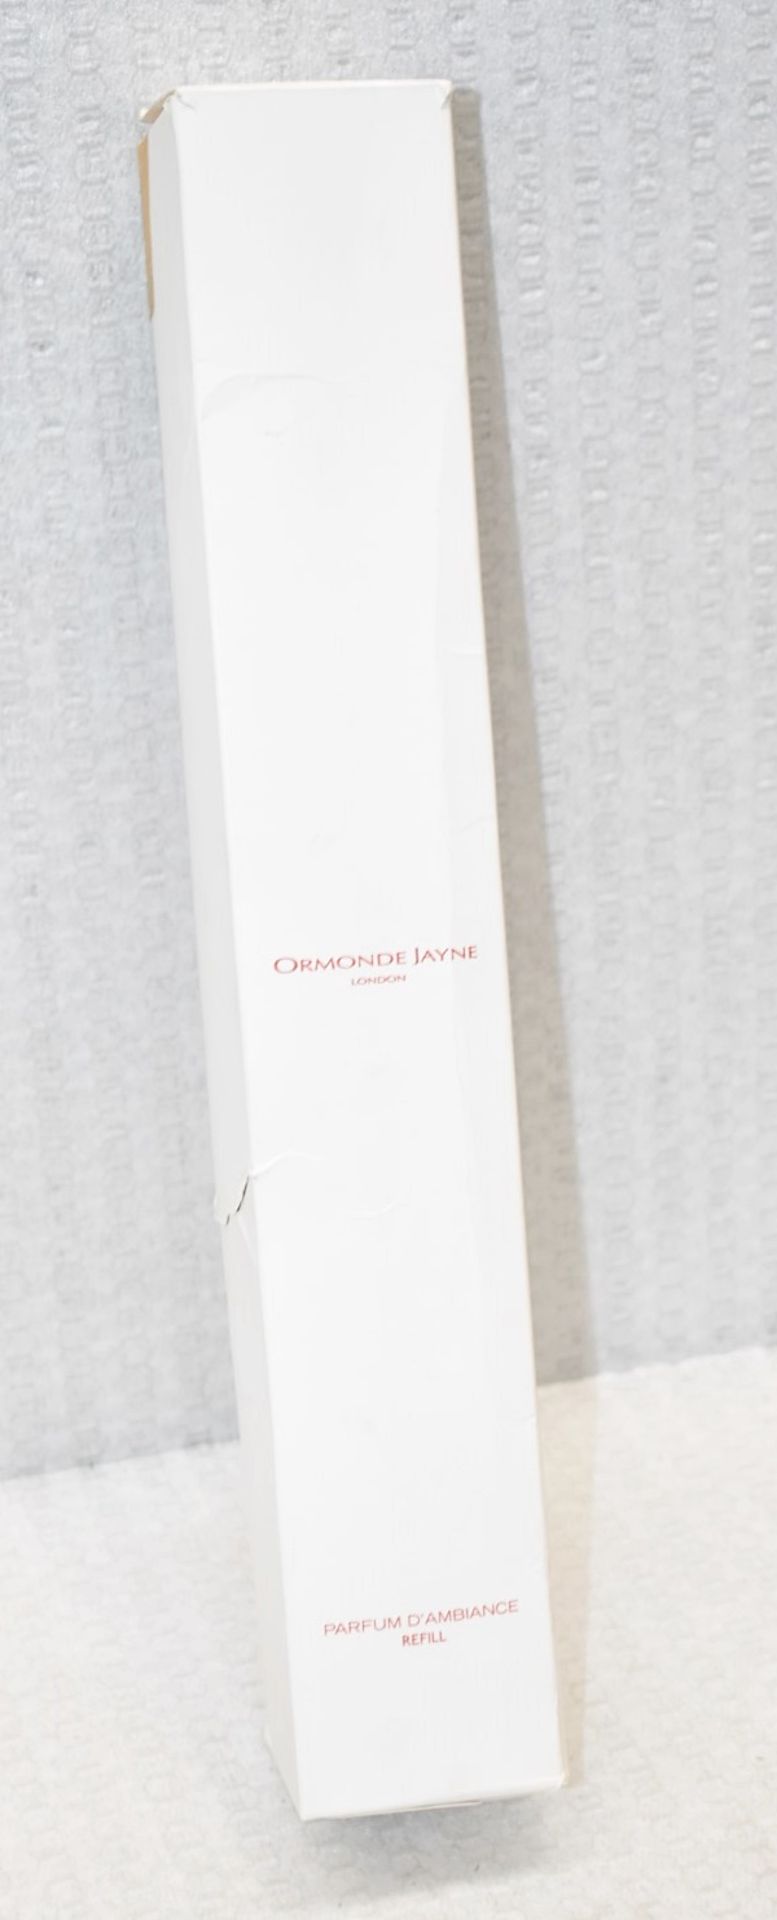 1 x ORMONDE JAYNE 'Casablanca' Diffuser Fragrance Refill, 500ml - Original Price £95.00 - Boxed - Image 4 of 6